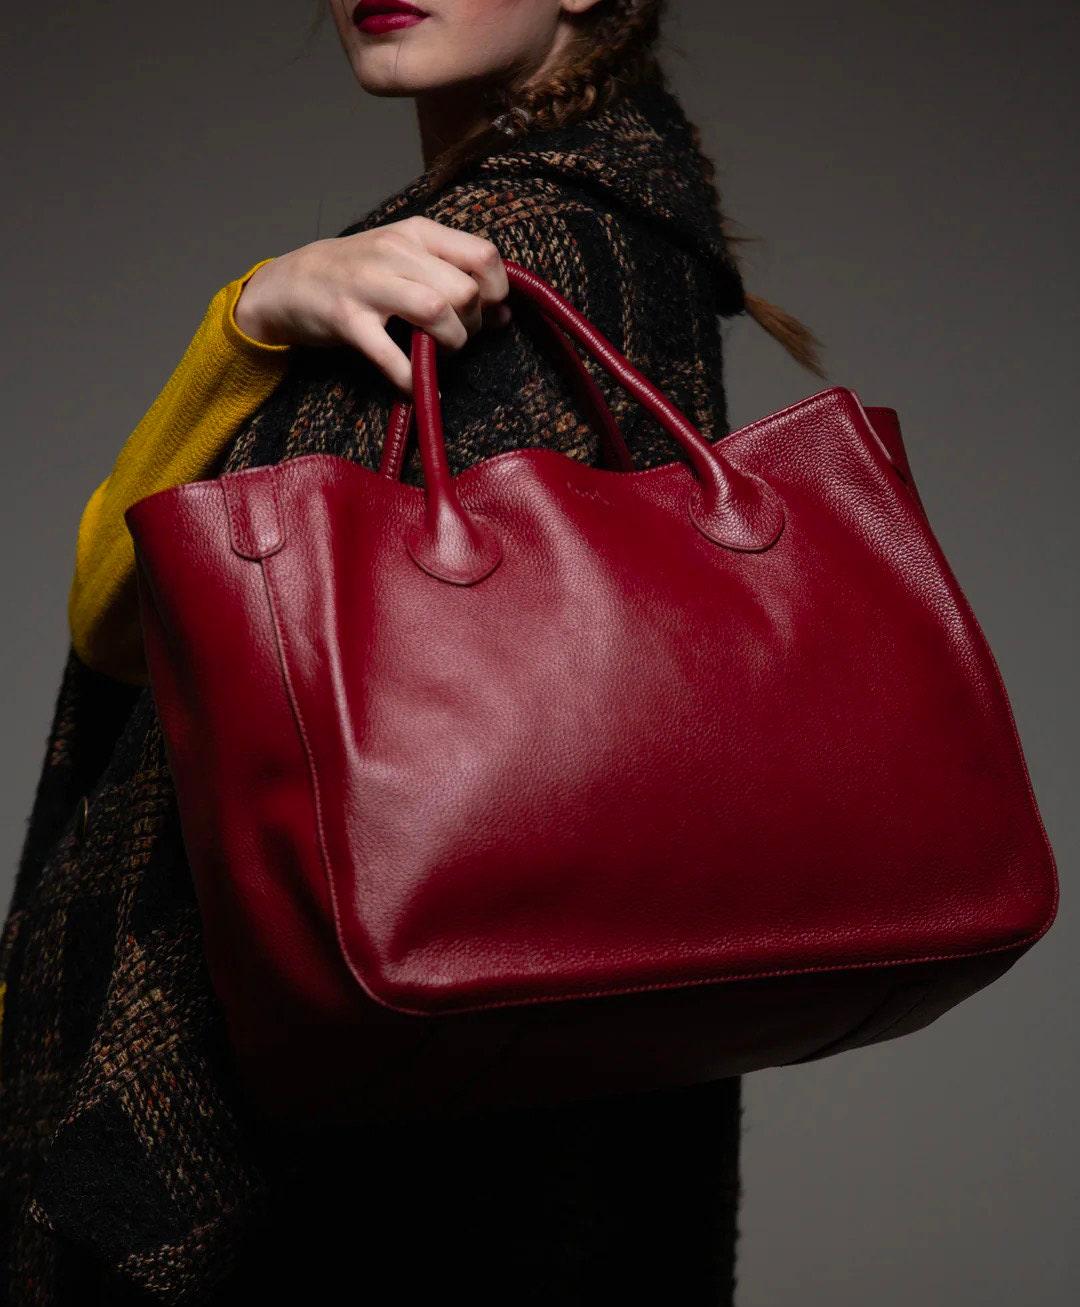 Deep Red Large Leather Tote Bag, Cowhide Leather Bag, Lady Fashion Bag, Leather Weekend Bag, Women Must-Have Designer Bag, Traveling Bag